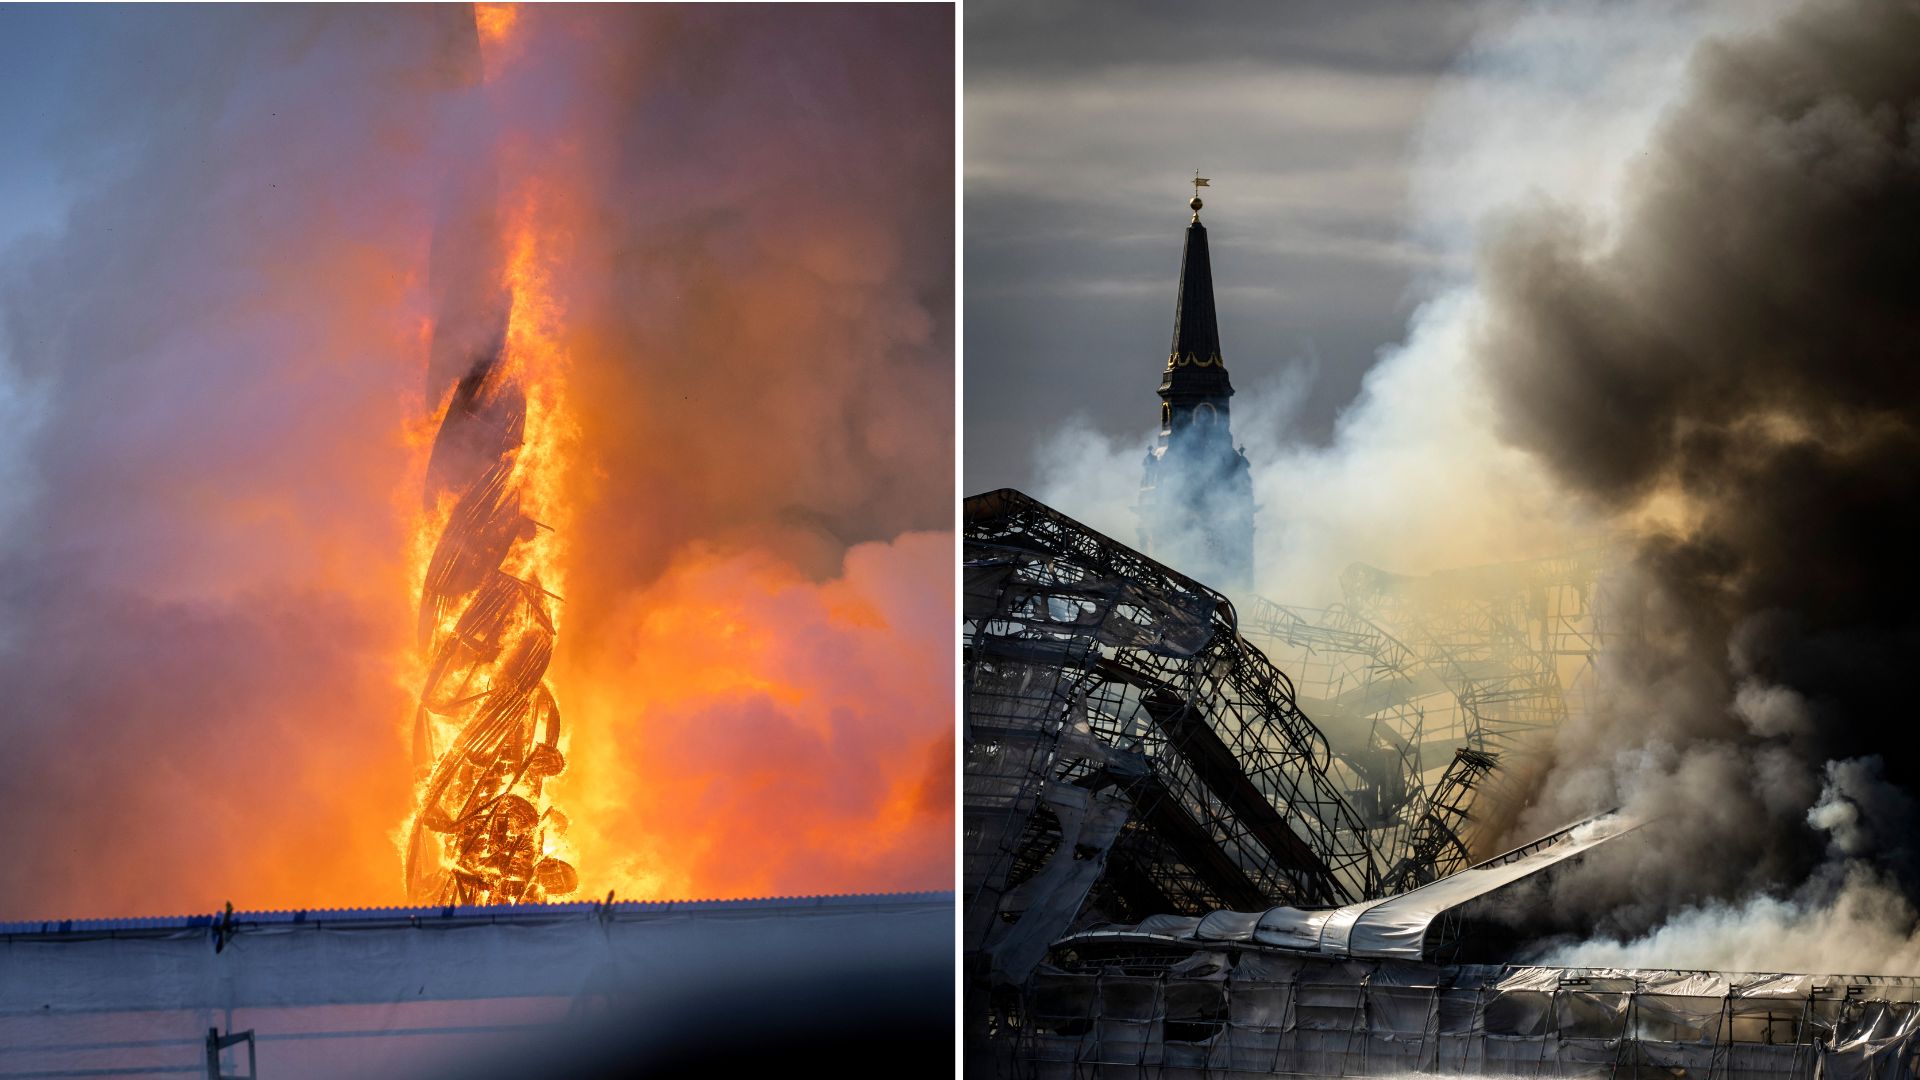 Copenhagen fire: Inferno hits historic stock exchange, toppling iconic spire